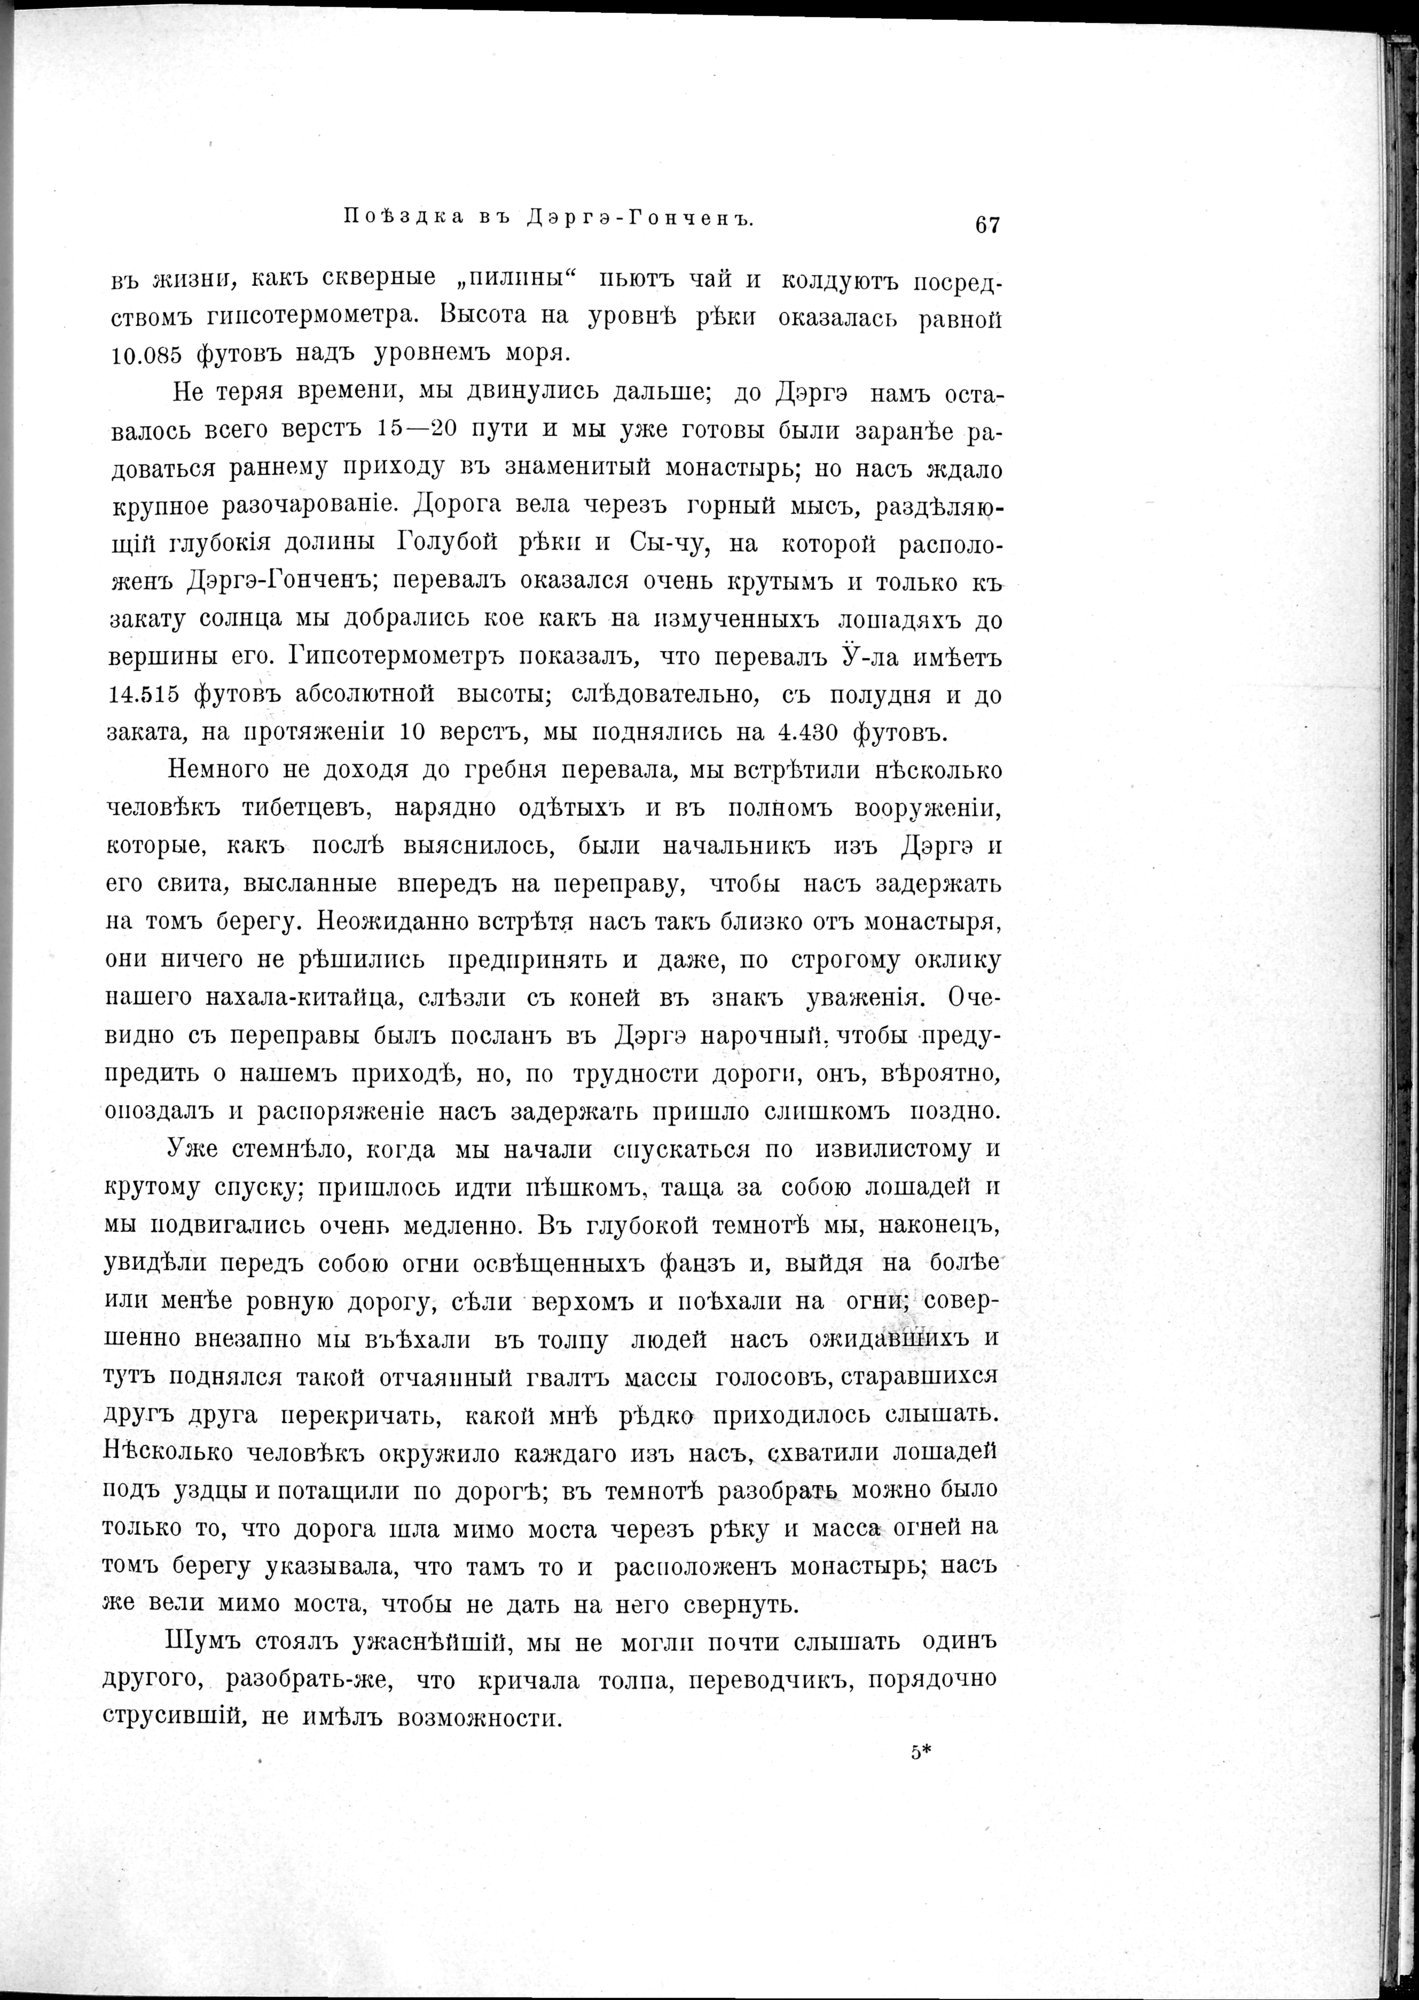 Mongoliia i Kam : vol.3 / Page 93 (Grayscale High Resolution Image)